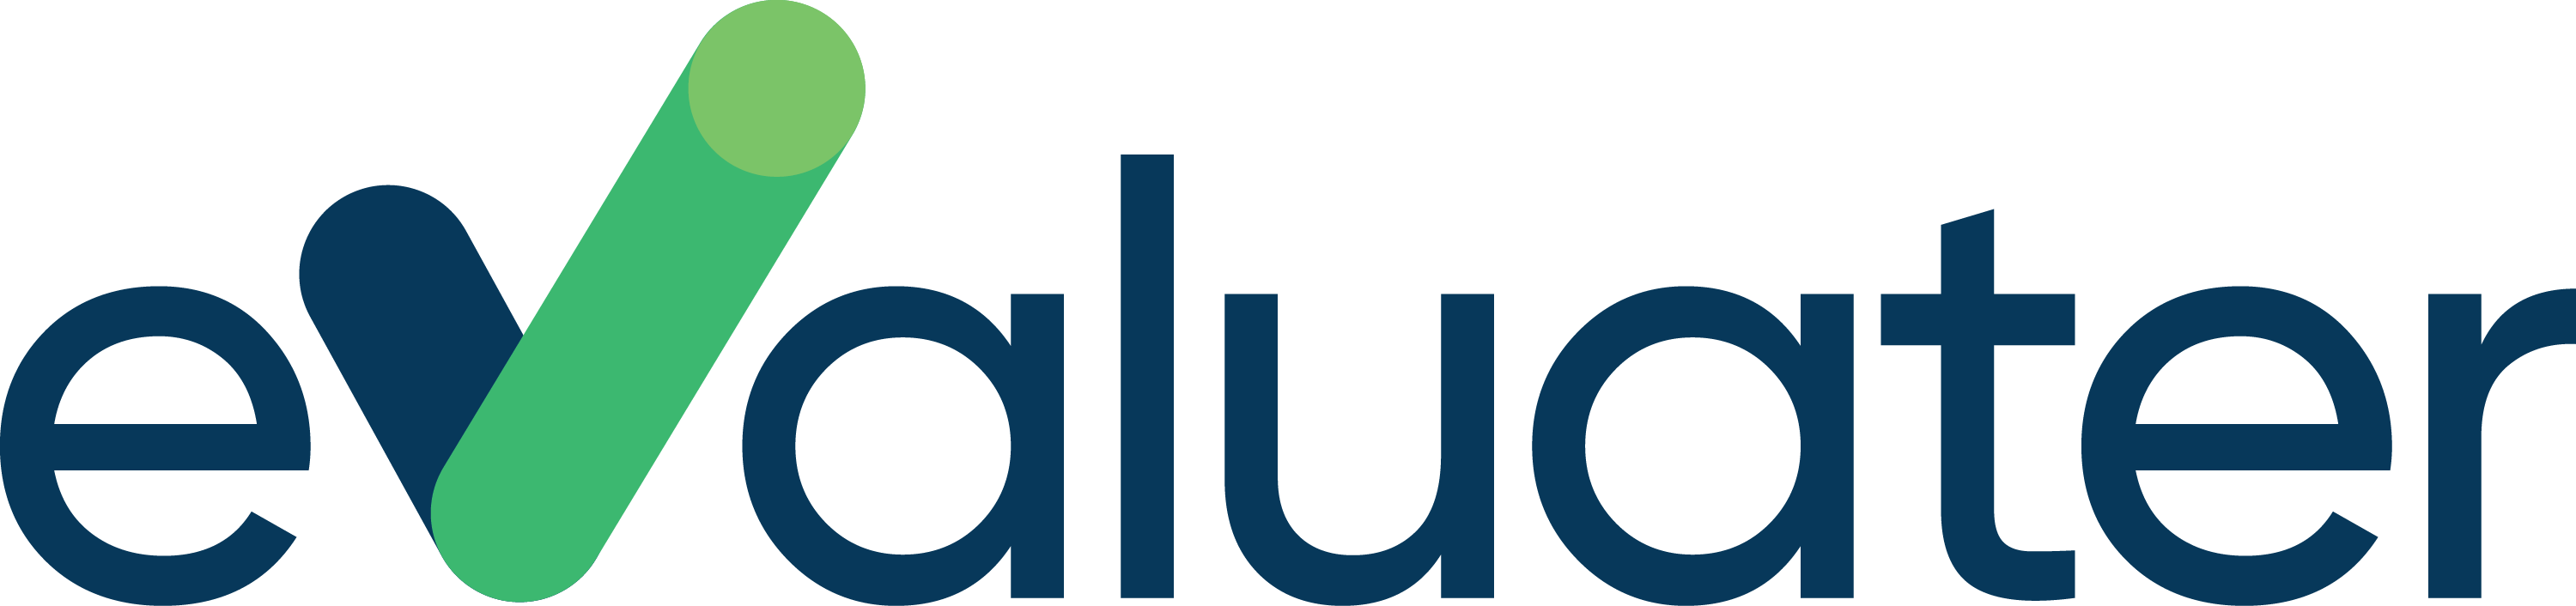 eValuater-logo-horizontal-1